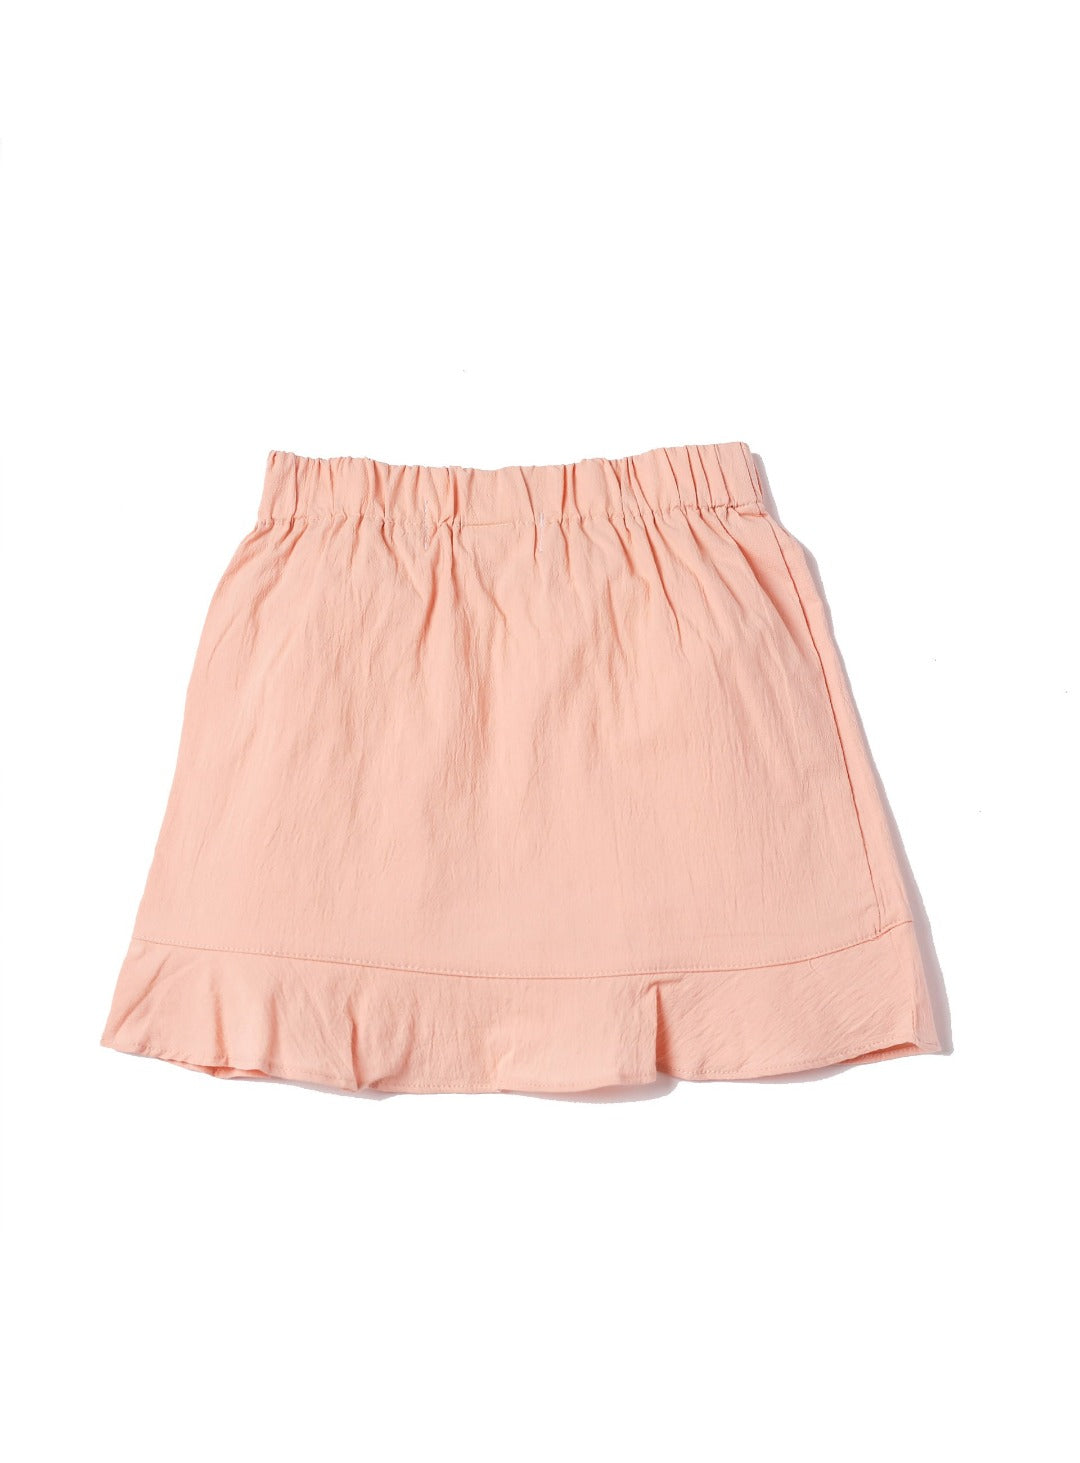 light peach petite skirt with ruffles